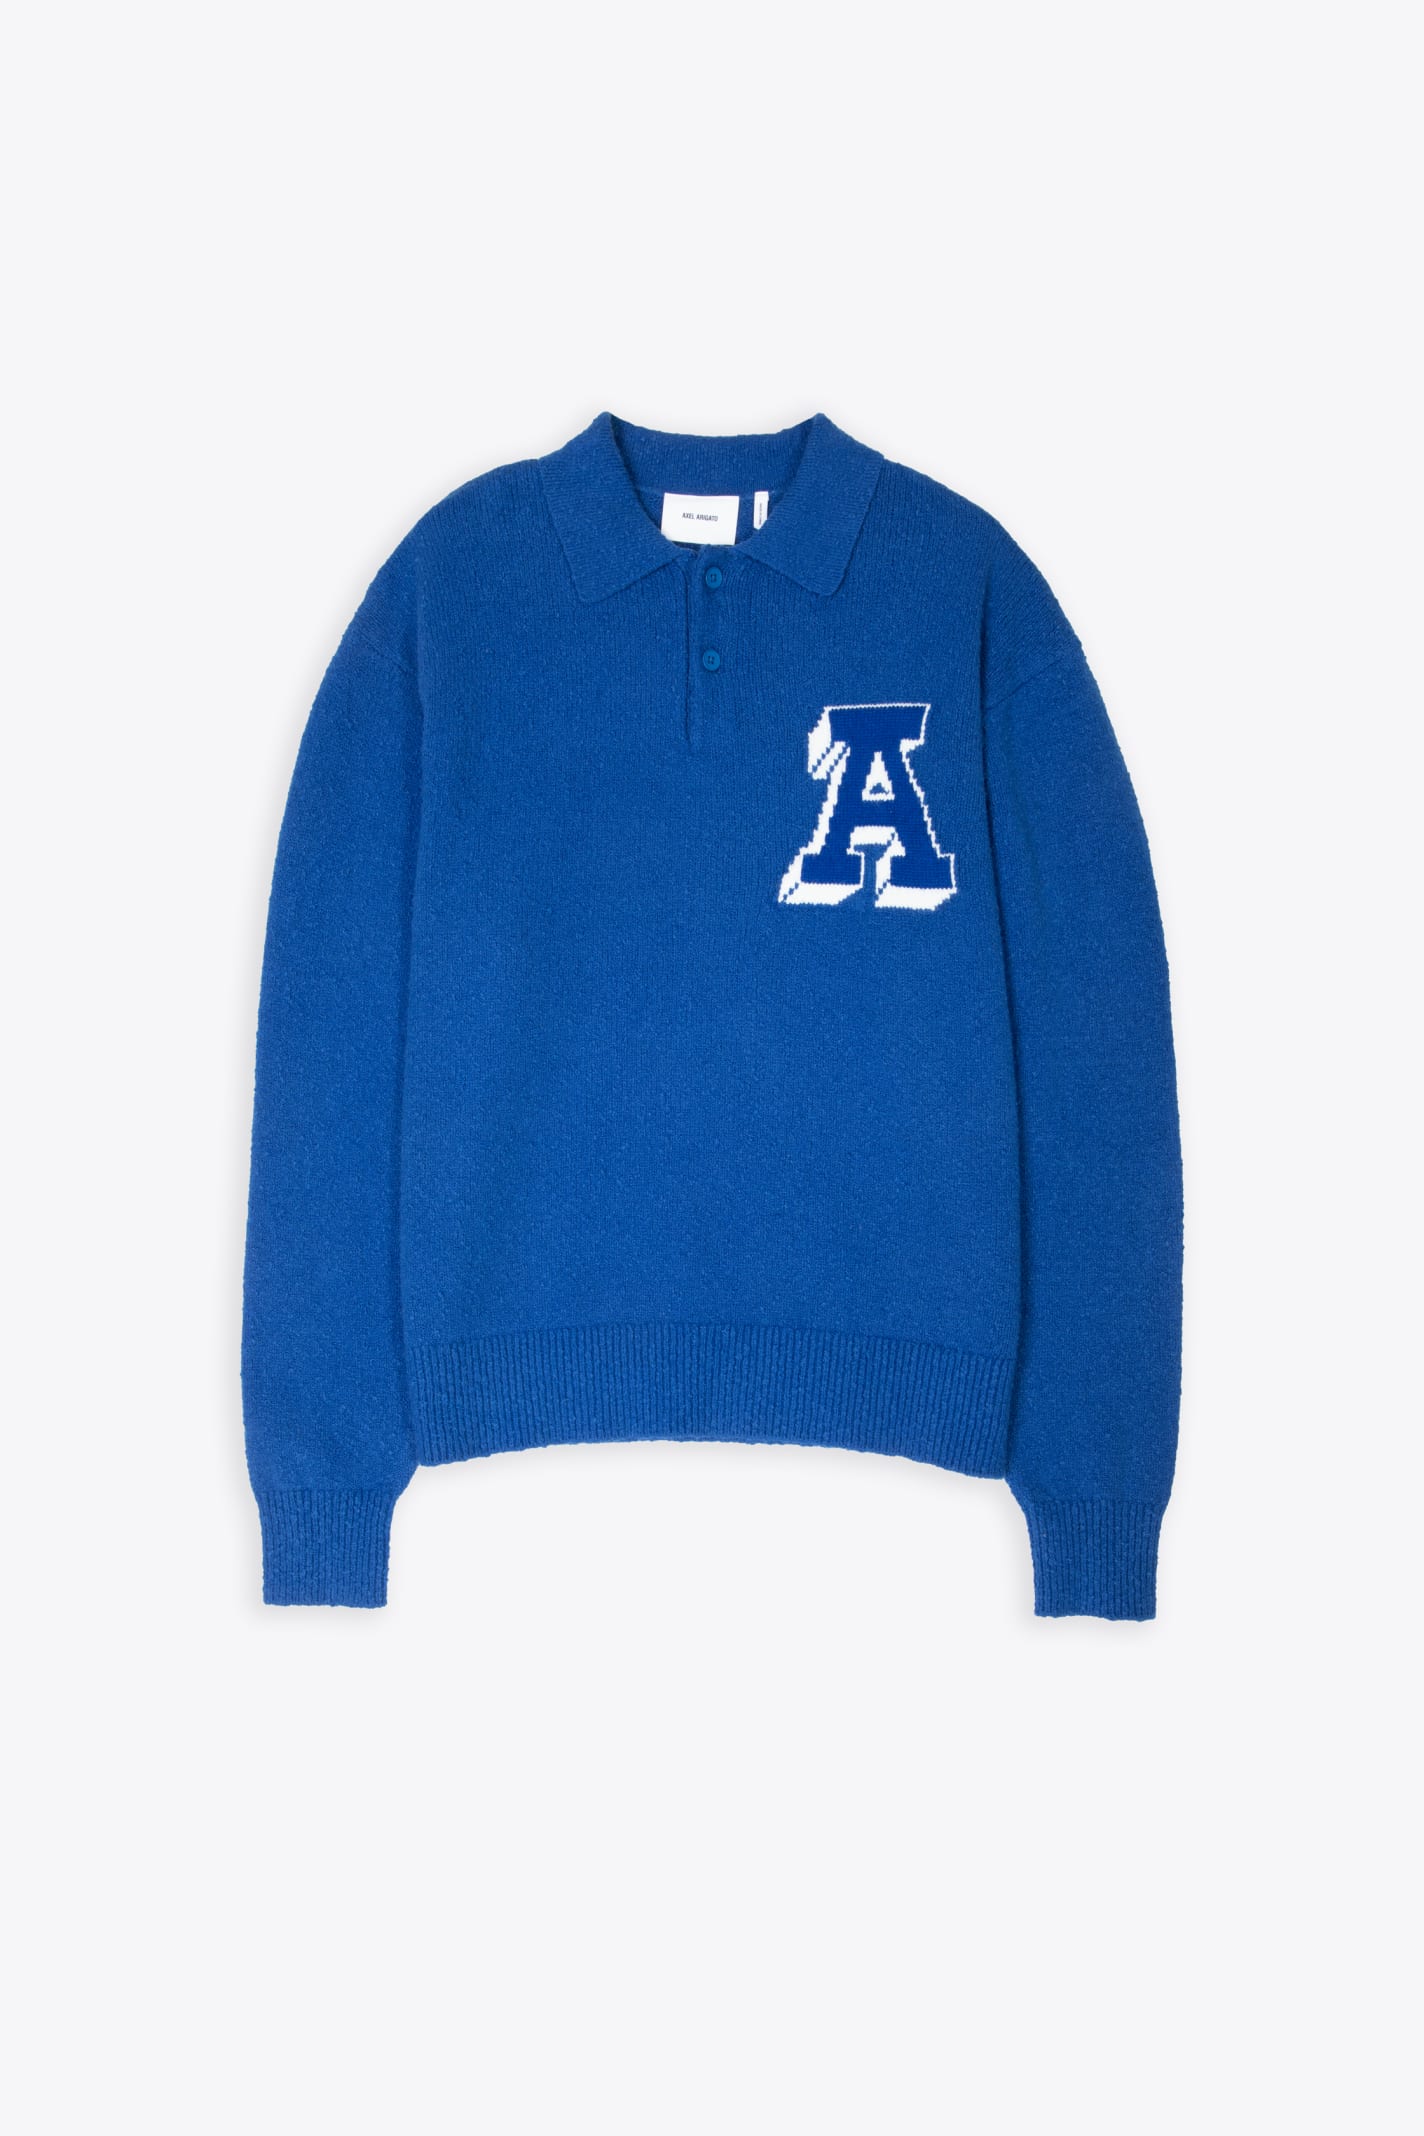 Team Polo Sweater Royal blue cotton blend polo sweater - Team Polo Sweater